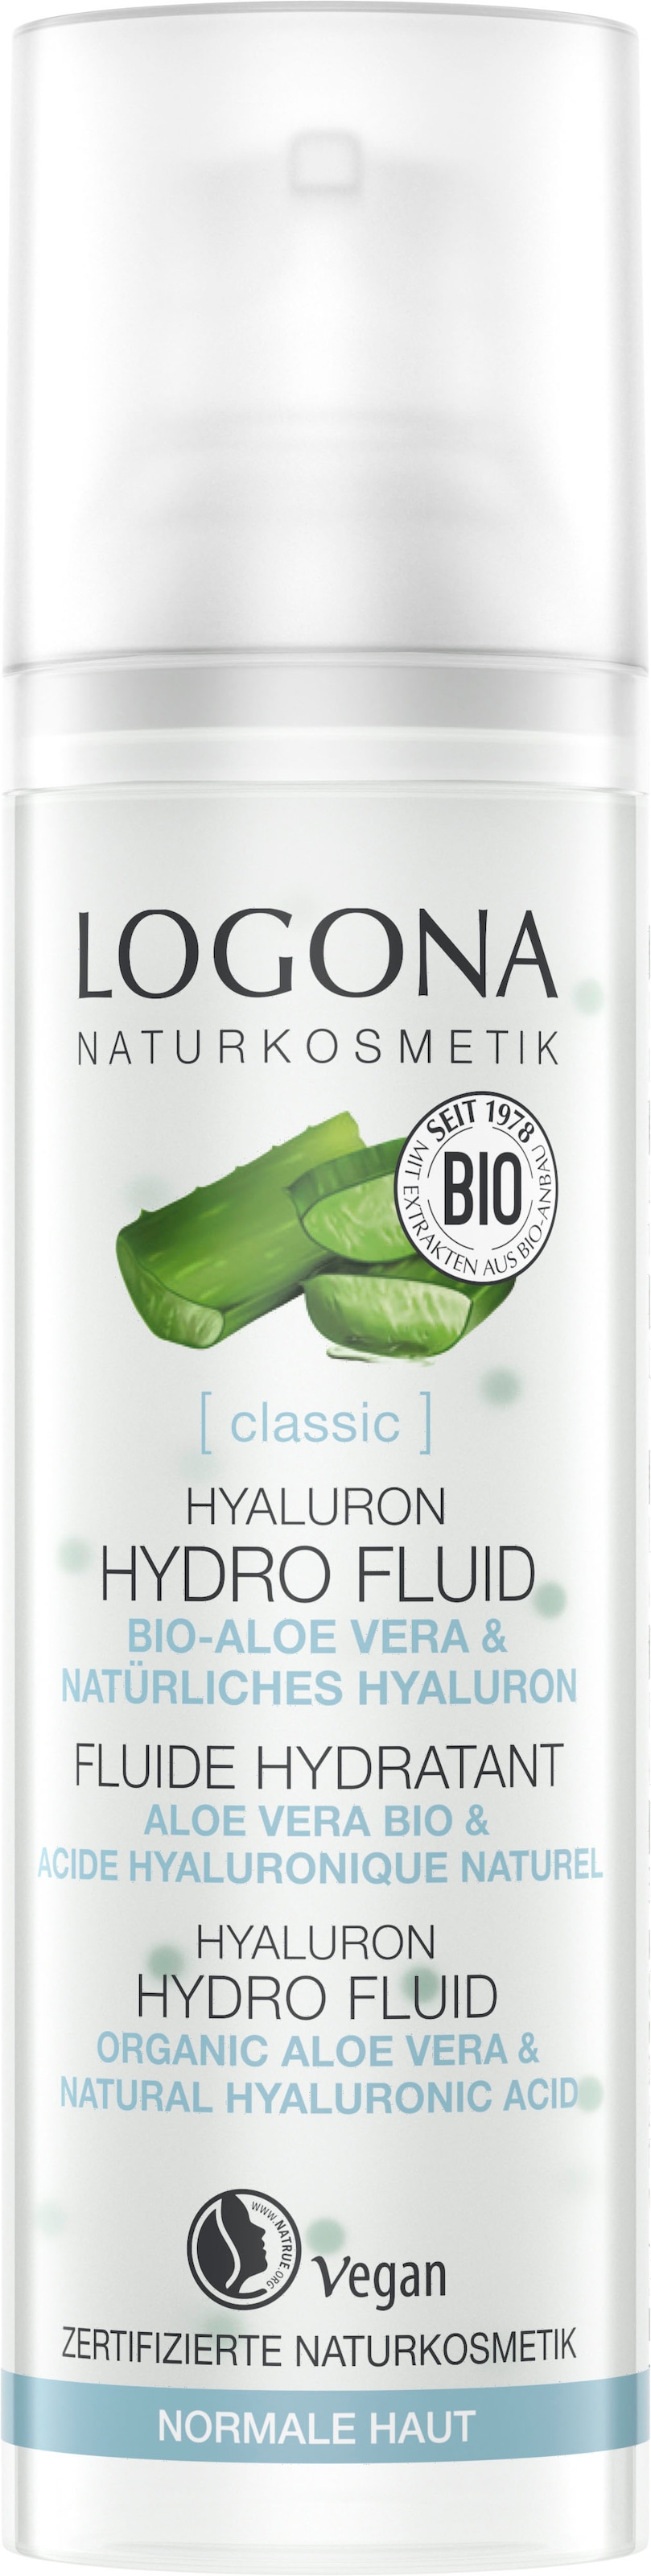 LOGONA Gesichtsfluid »Logona classic Hyaluron Hydro Fluid« bei ♕